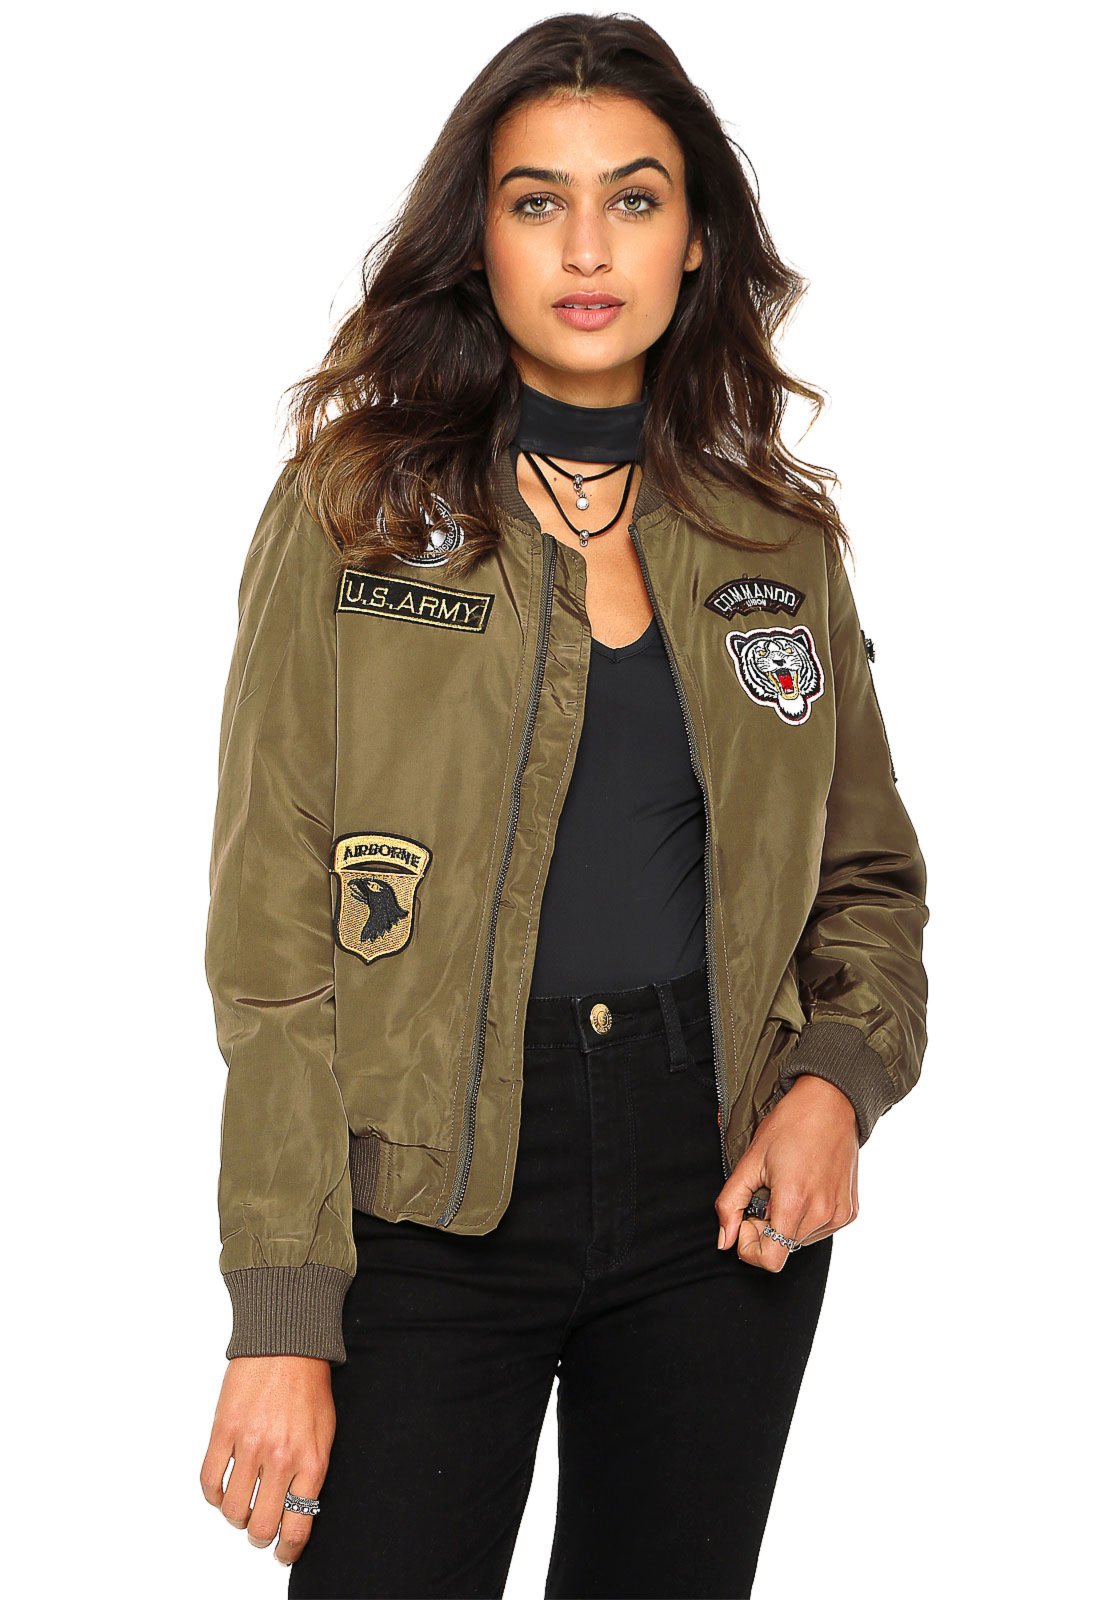 jaqueta bomber verde militar feminina